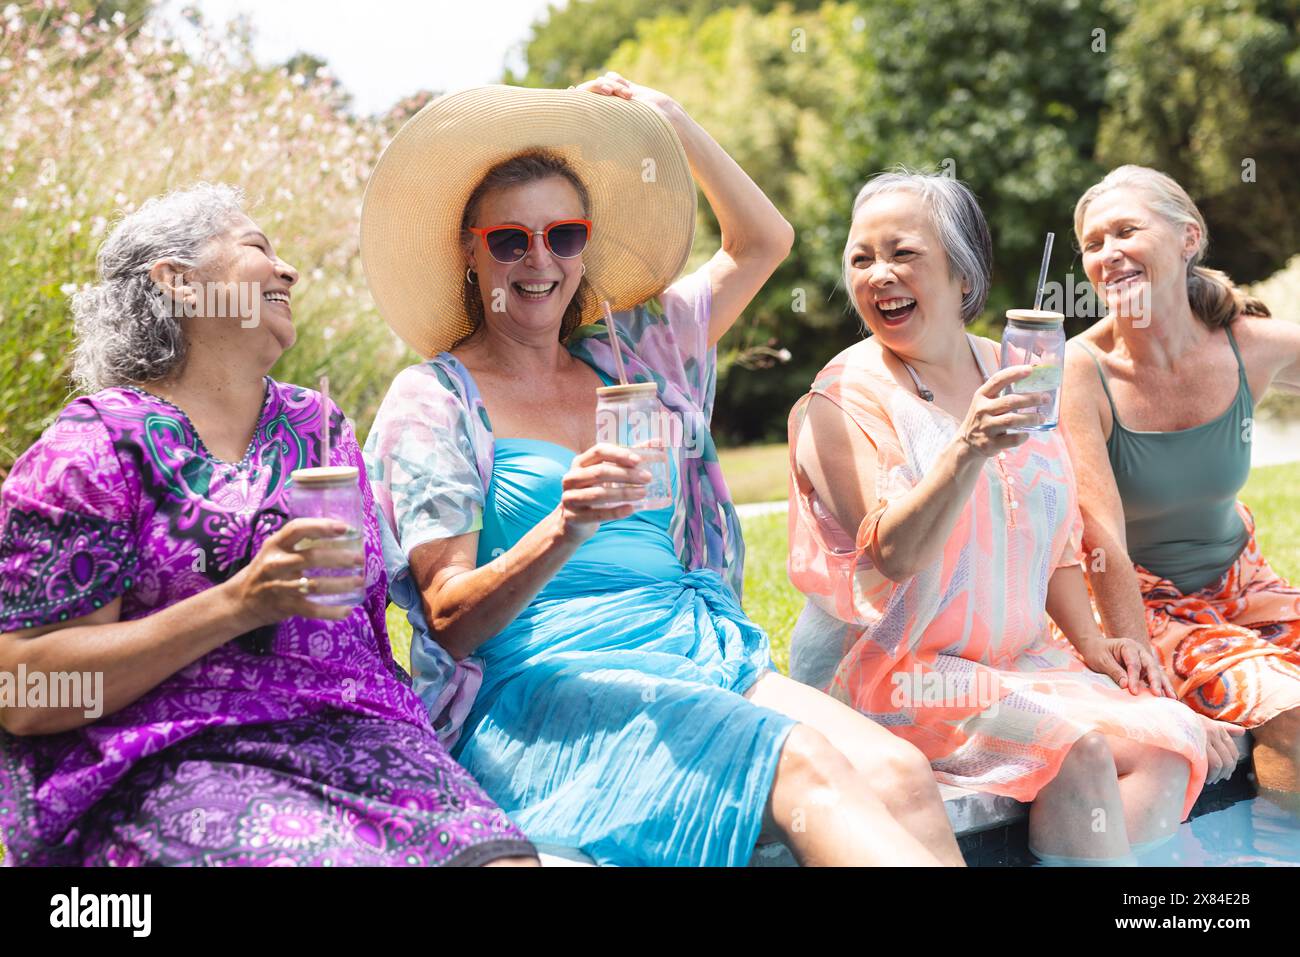 Im Freien lachen verschiedene ältere Freundinnen am Pool Stockfoto